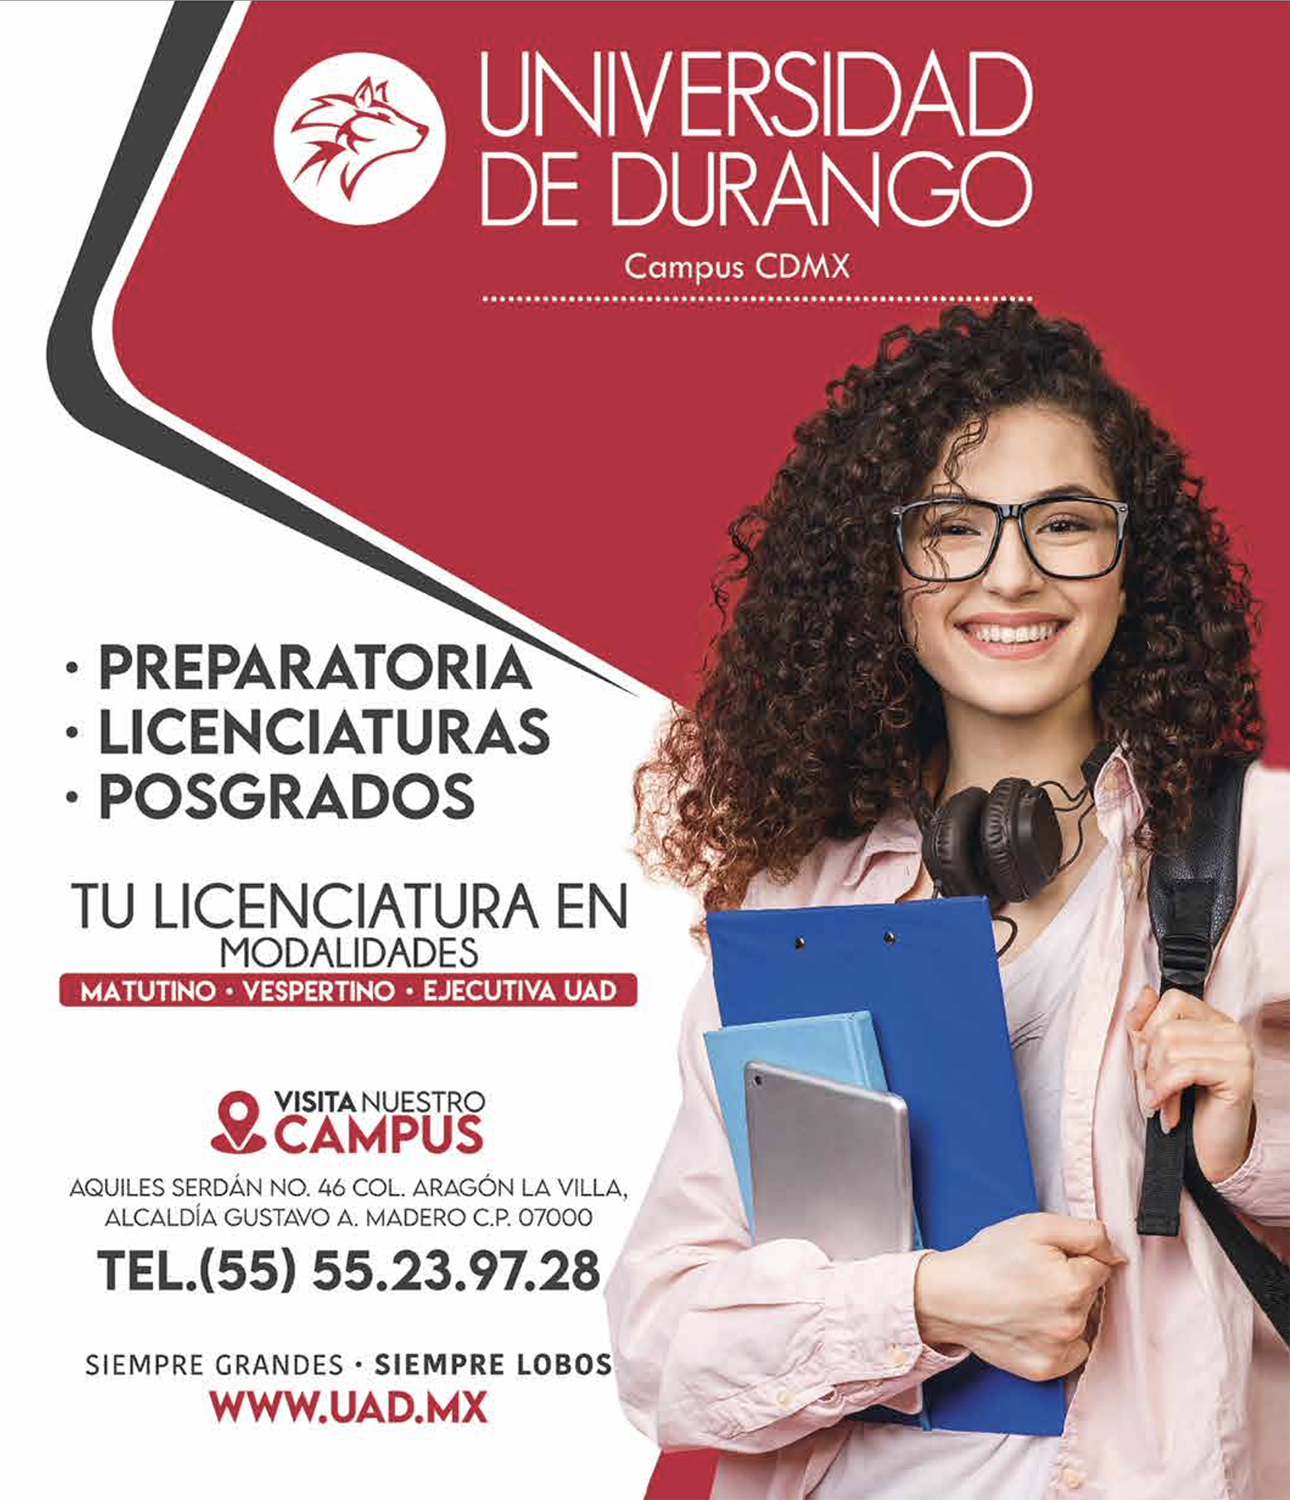 Universidad Autónoma de Durango - Tops México Mejores Universidades